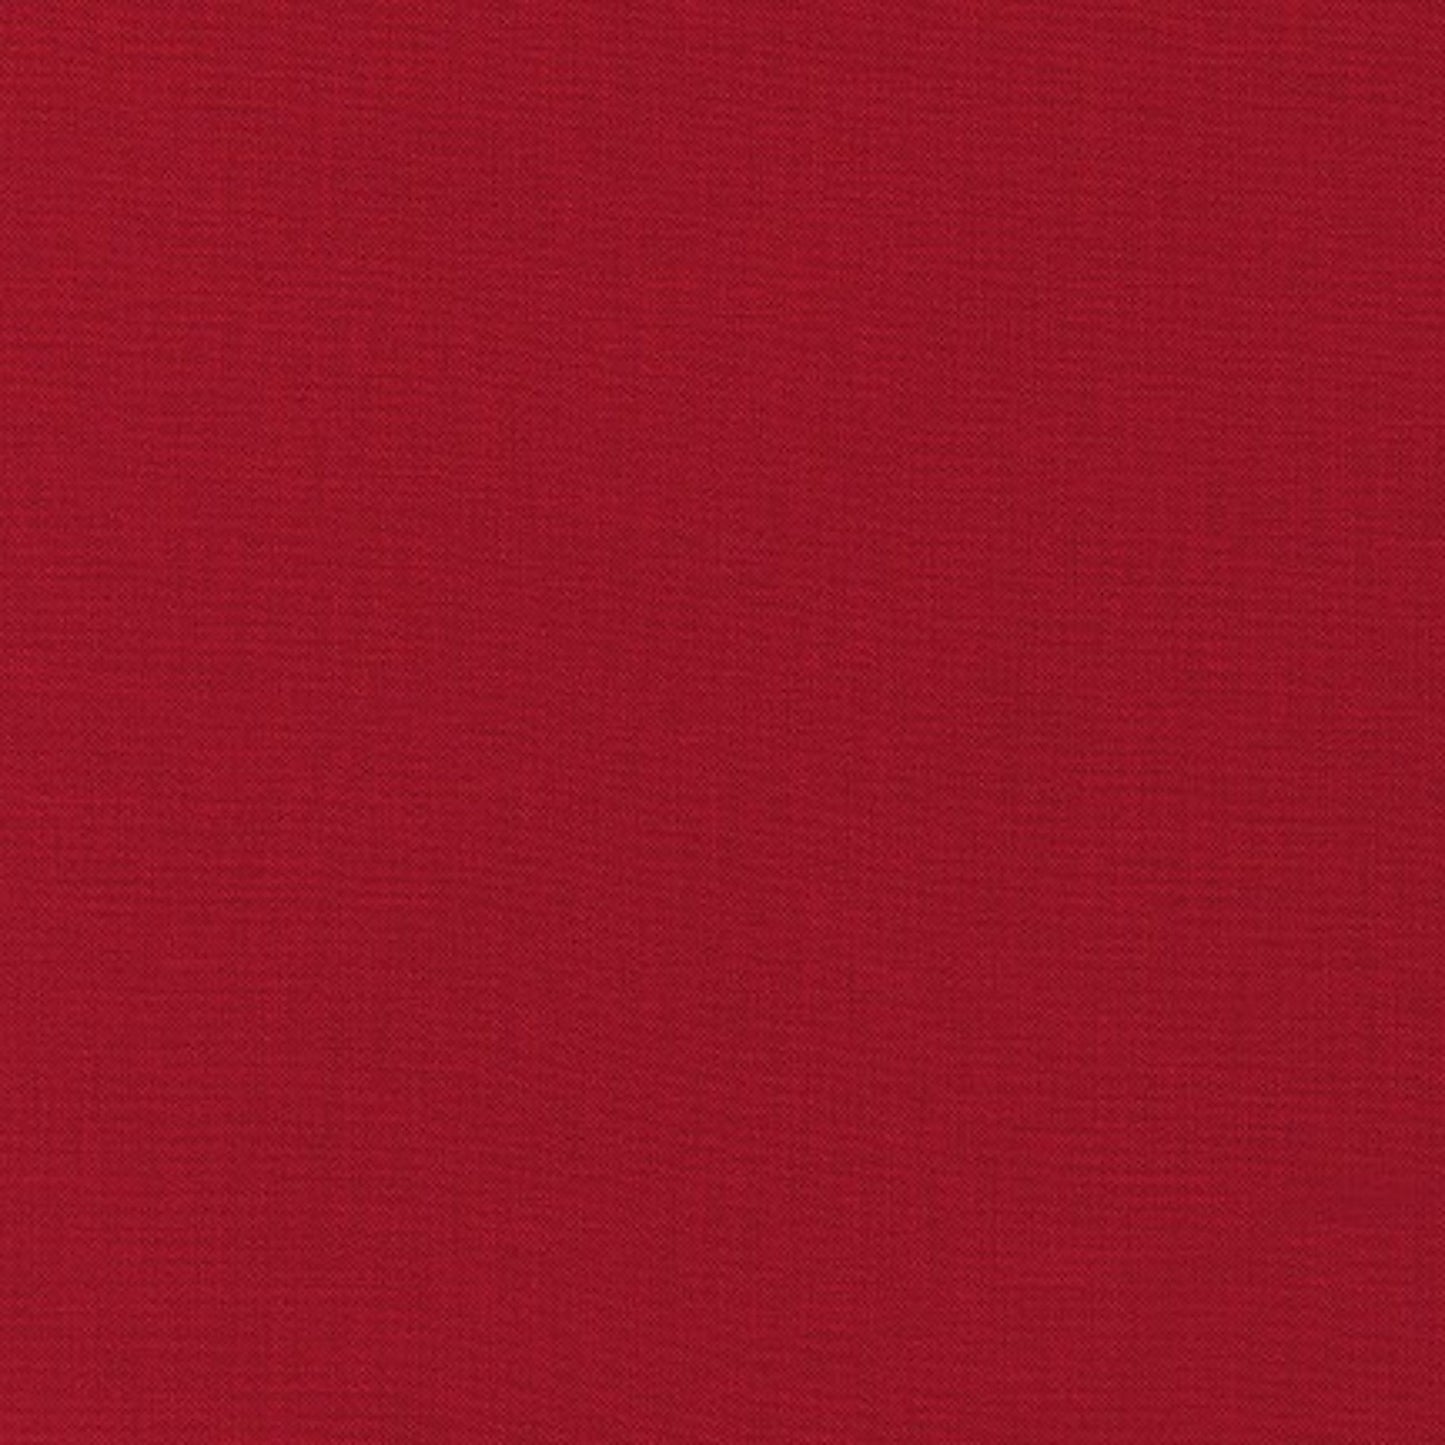 Kona Cotton "Chinese Red"-Robert Kaufman-BTY